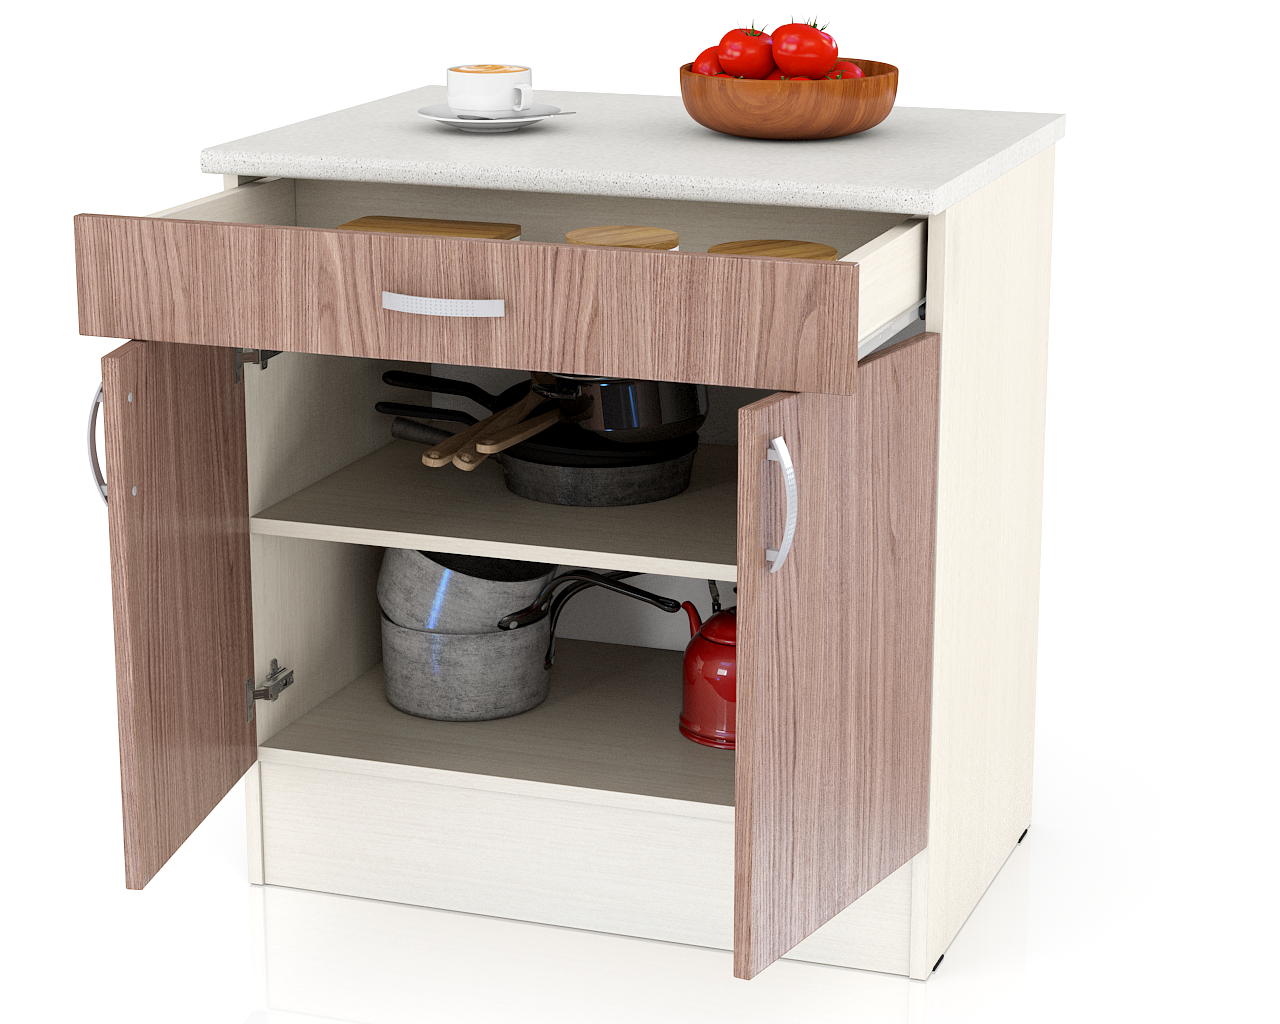 Кухонный стол МД-ШН1Я800 Стол с 1 ящиком 80 см, цвет дуб/ясень шимо тёмный, ШхГхВ 80х60х85 см.